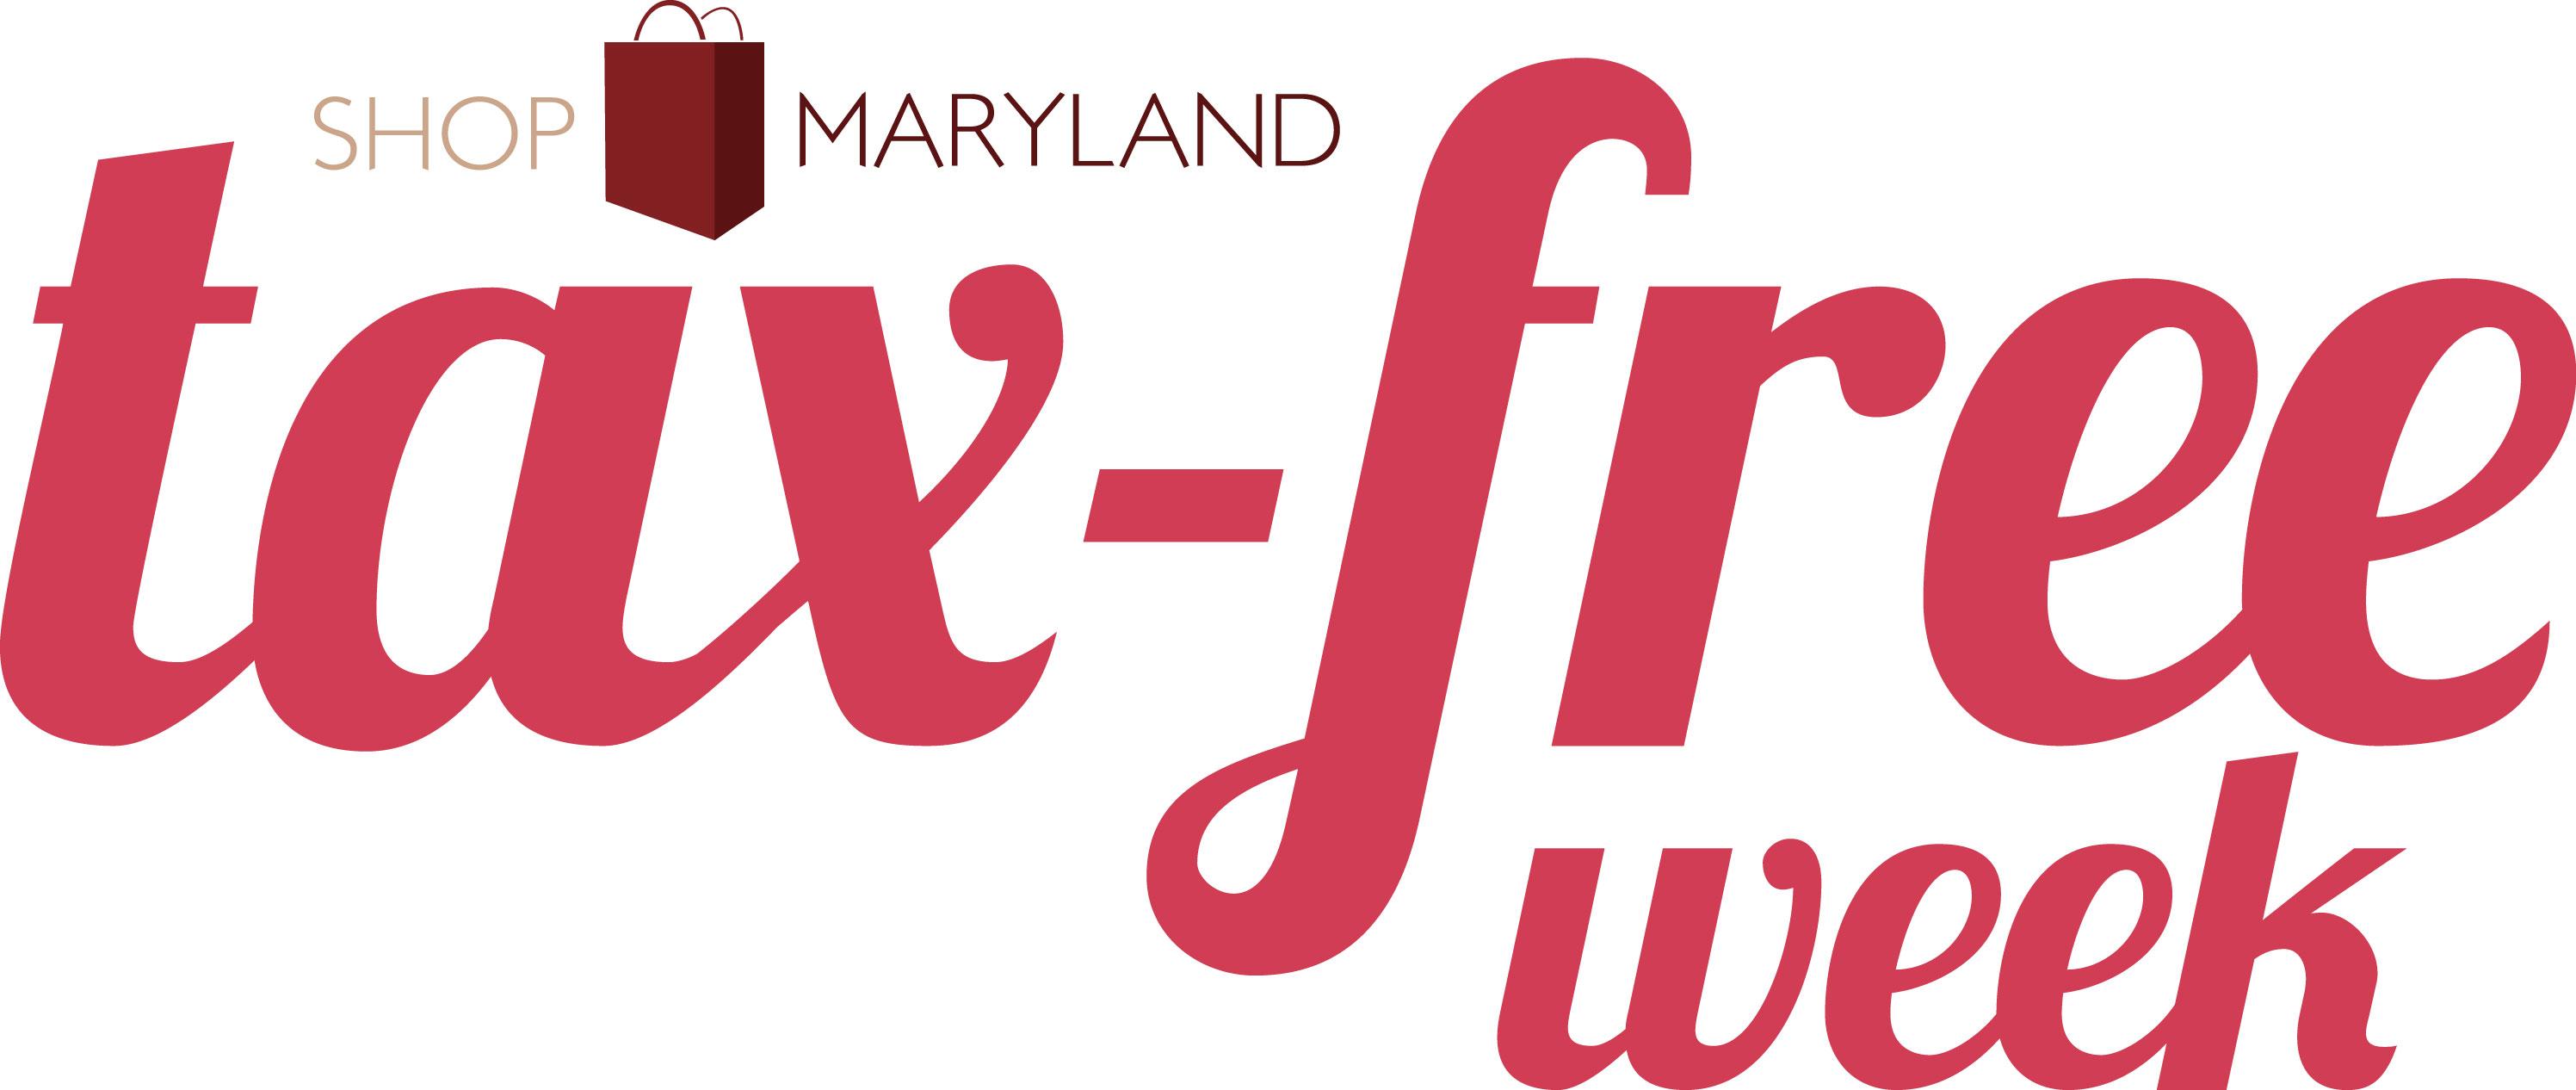 Shop Maryland TaxFree Week SHIP SAVES